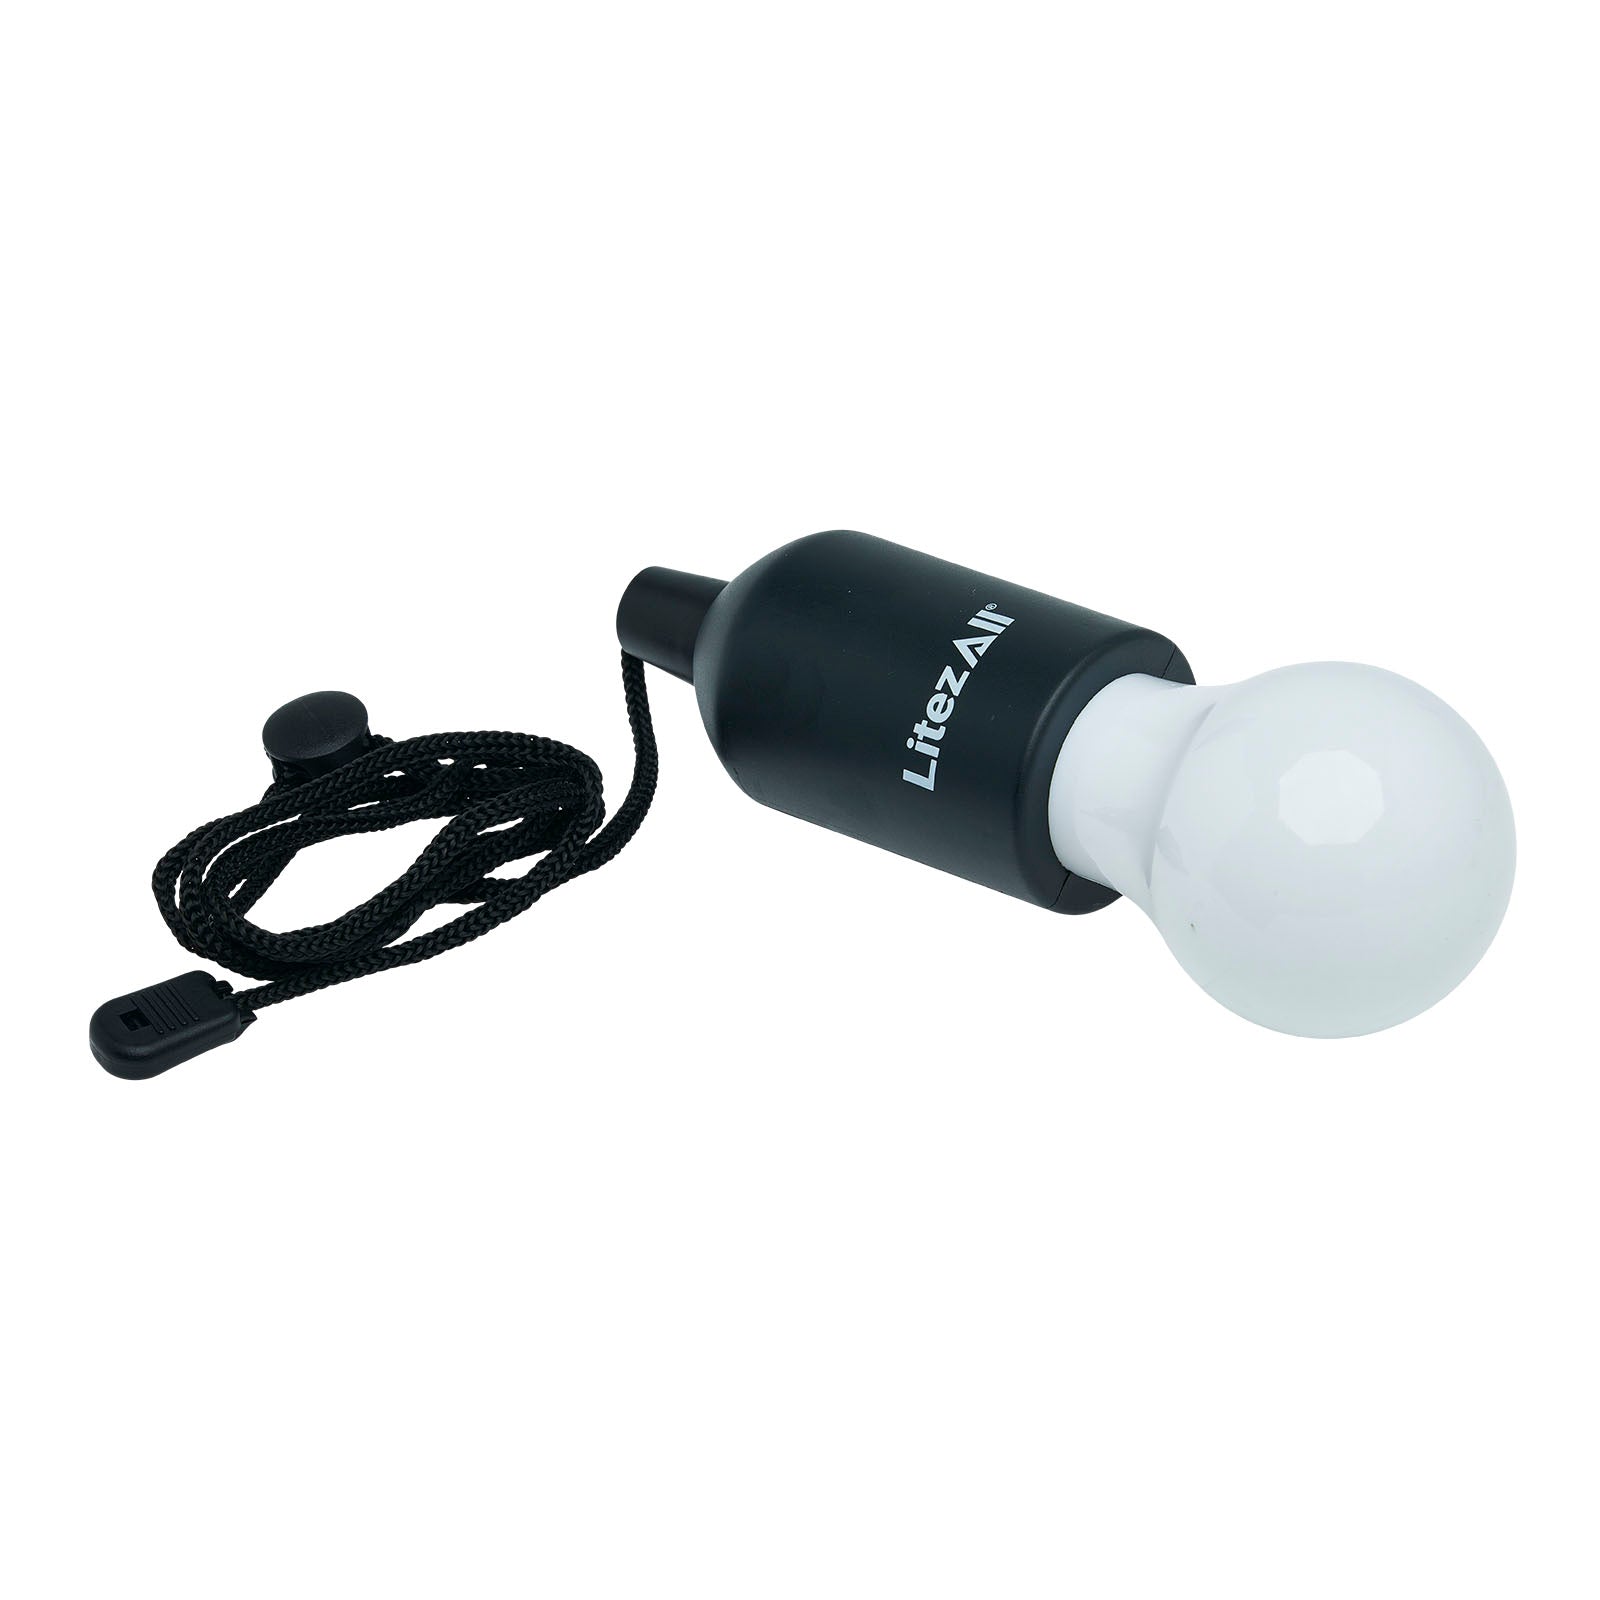 LitezAll Pull String Battery Operated Light Bulb